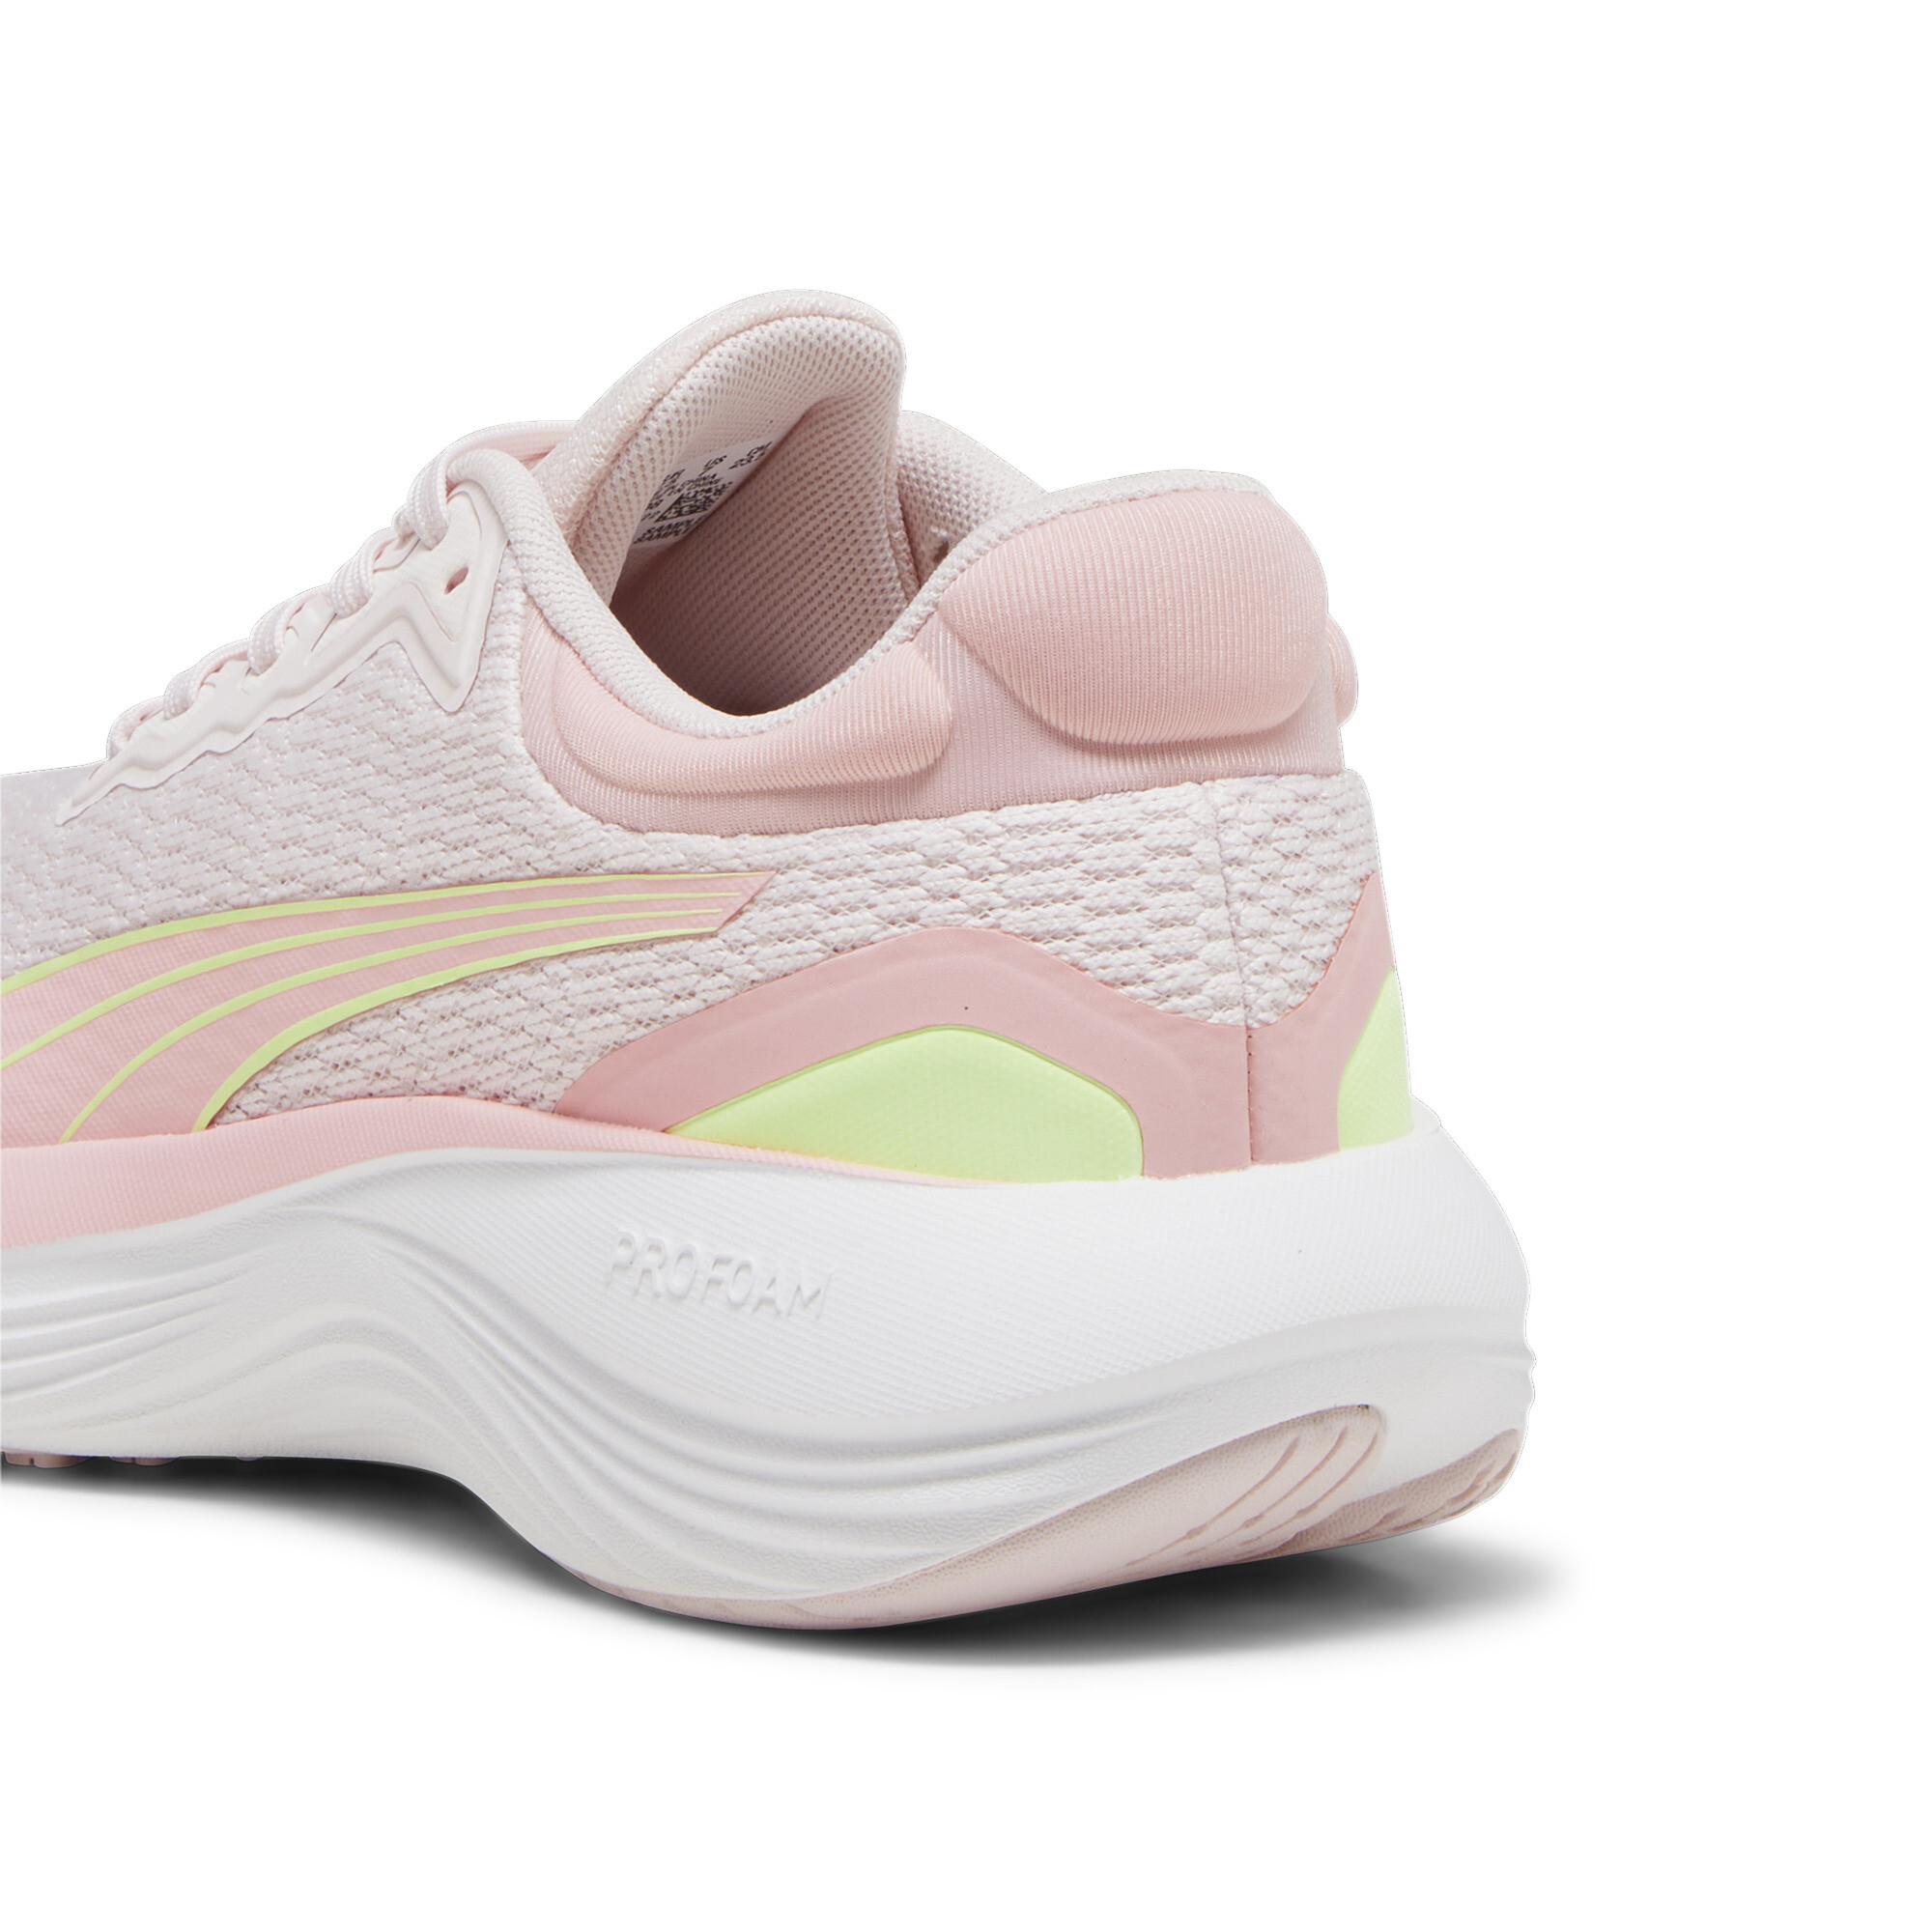 Men's PUMA Scend Pro Running Shoes In Pink, Size EU 38